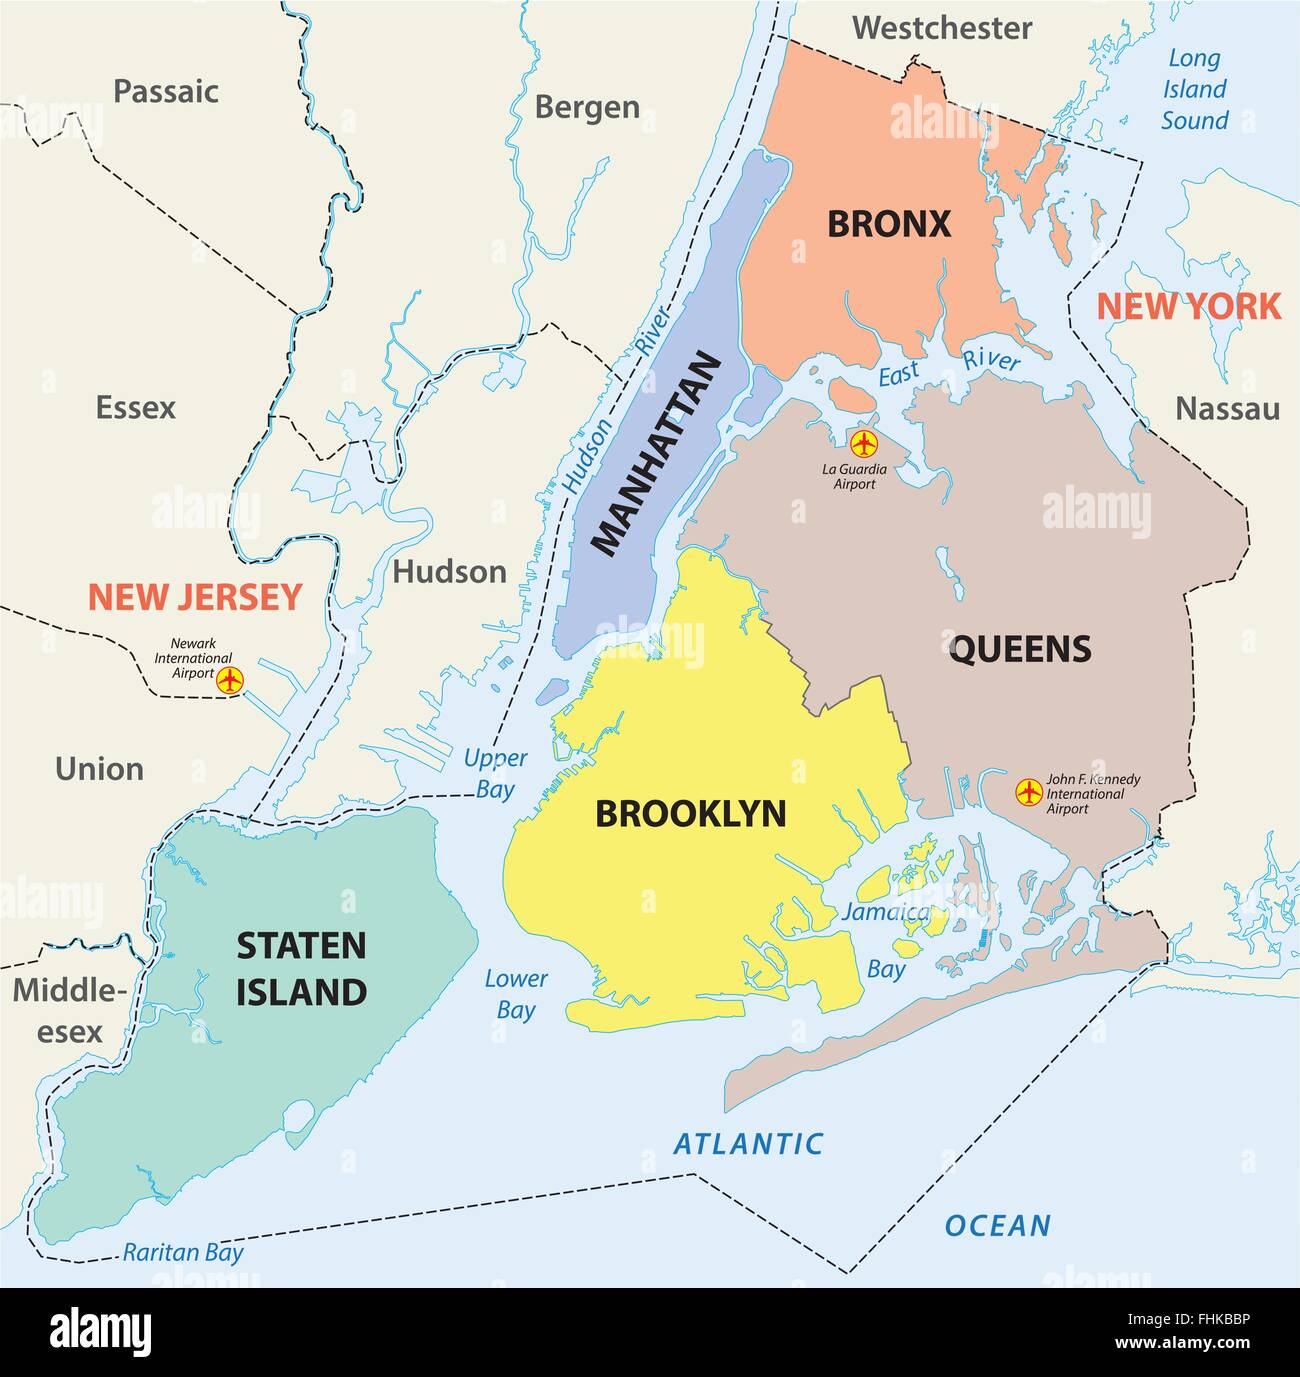 New York City 5 Boroughs Map FHKBBP 